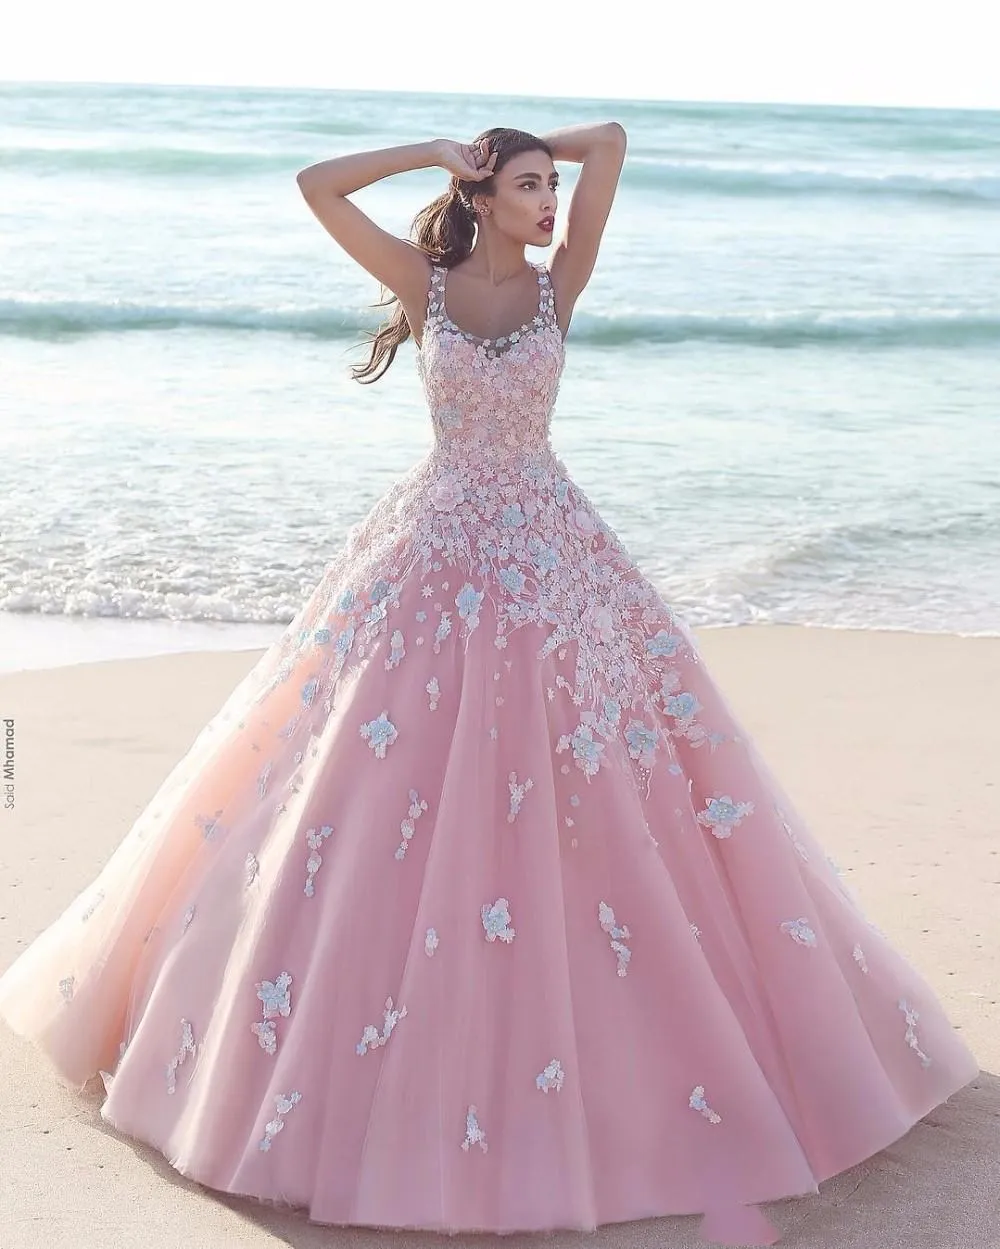 Princesa flor floral rosa bola vestido quinceanera vestidos applique tulle colher sem mangas laço corpete longo vestido de baile festa formal